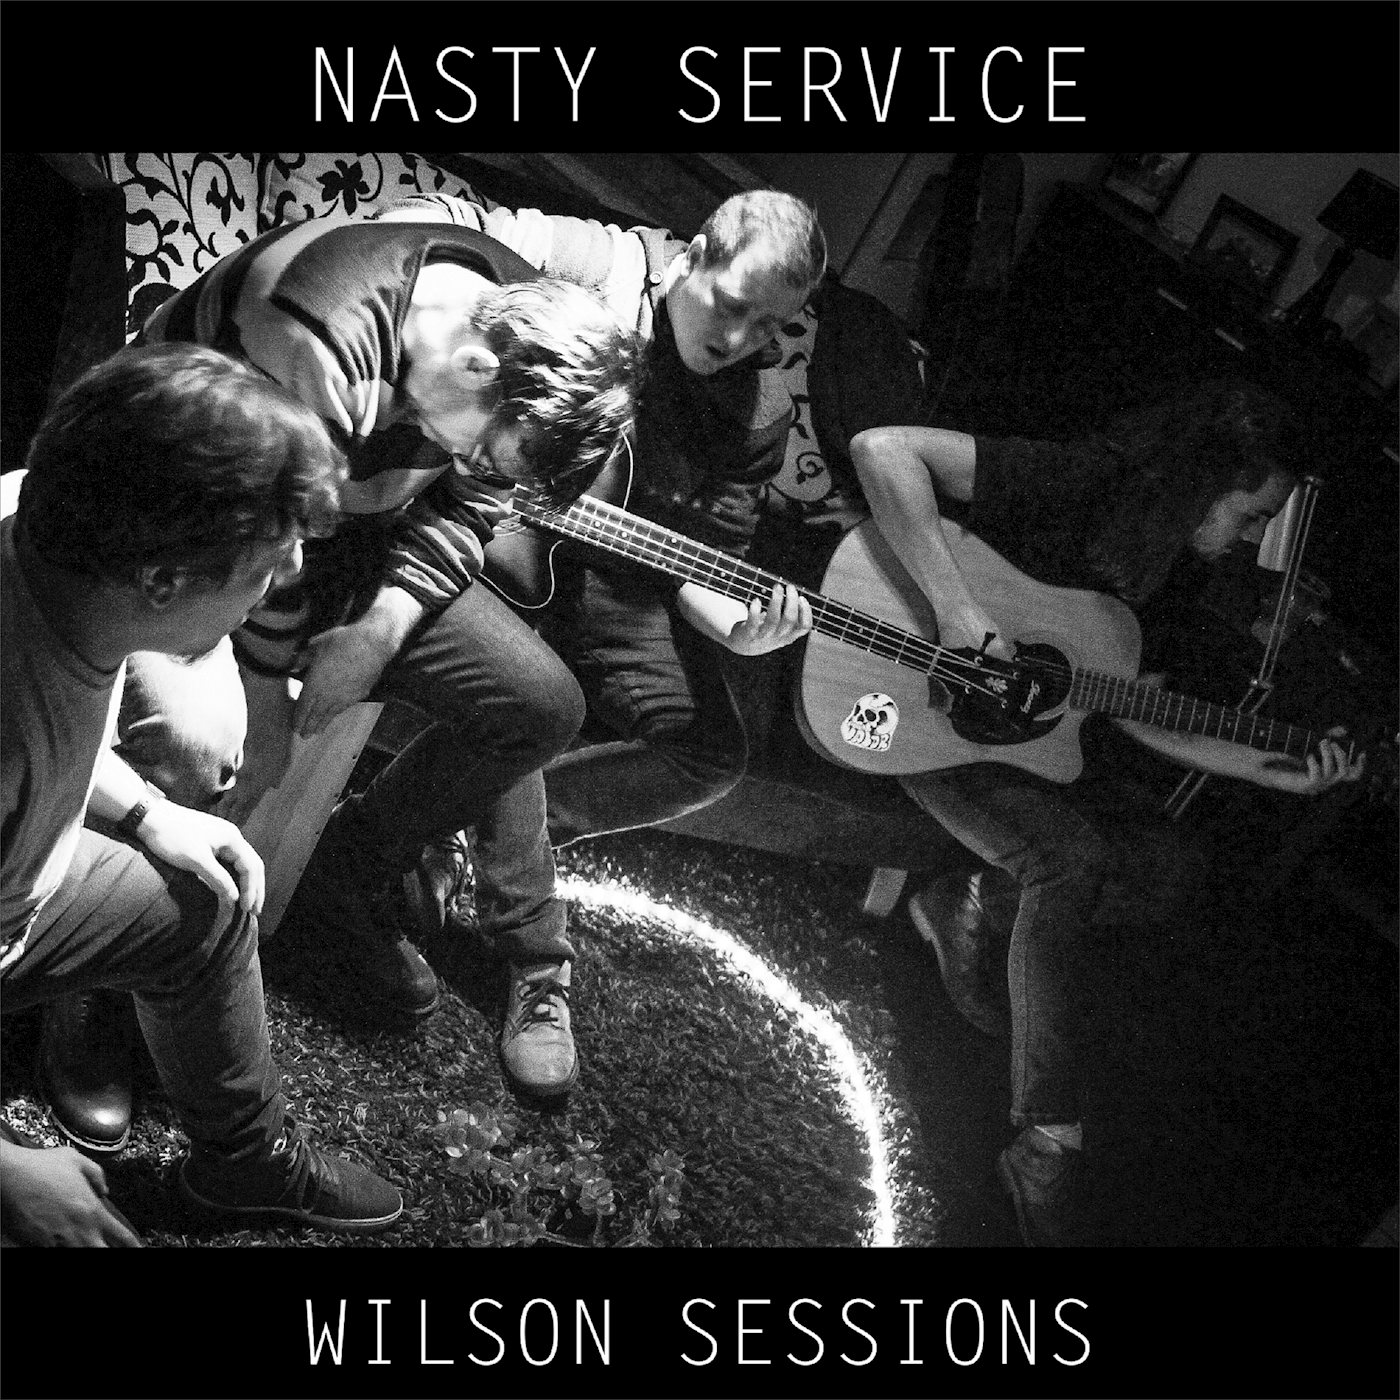 Wilsson Sessions